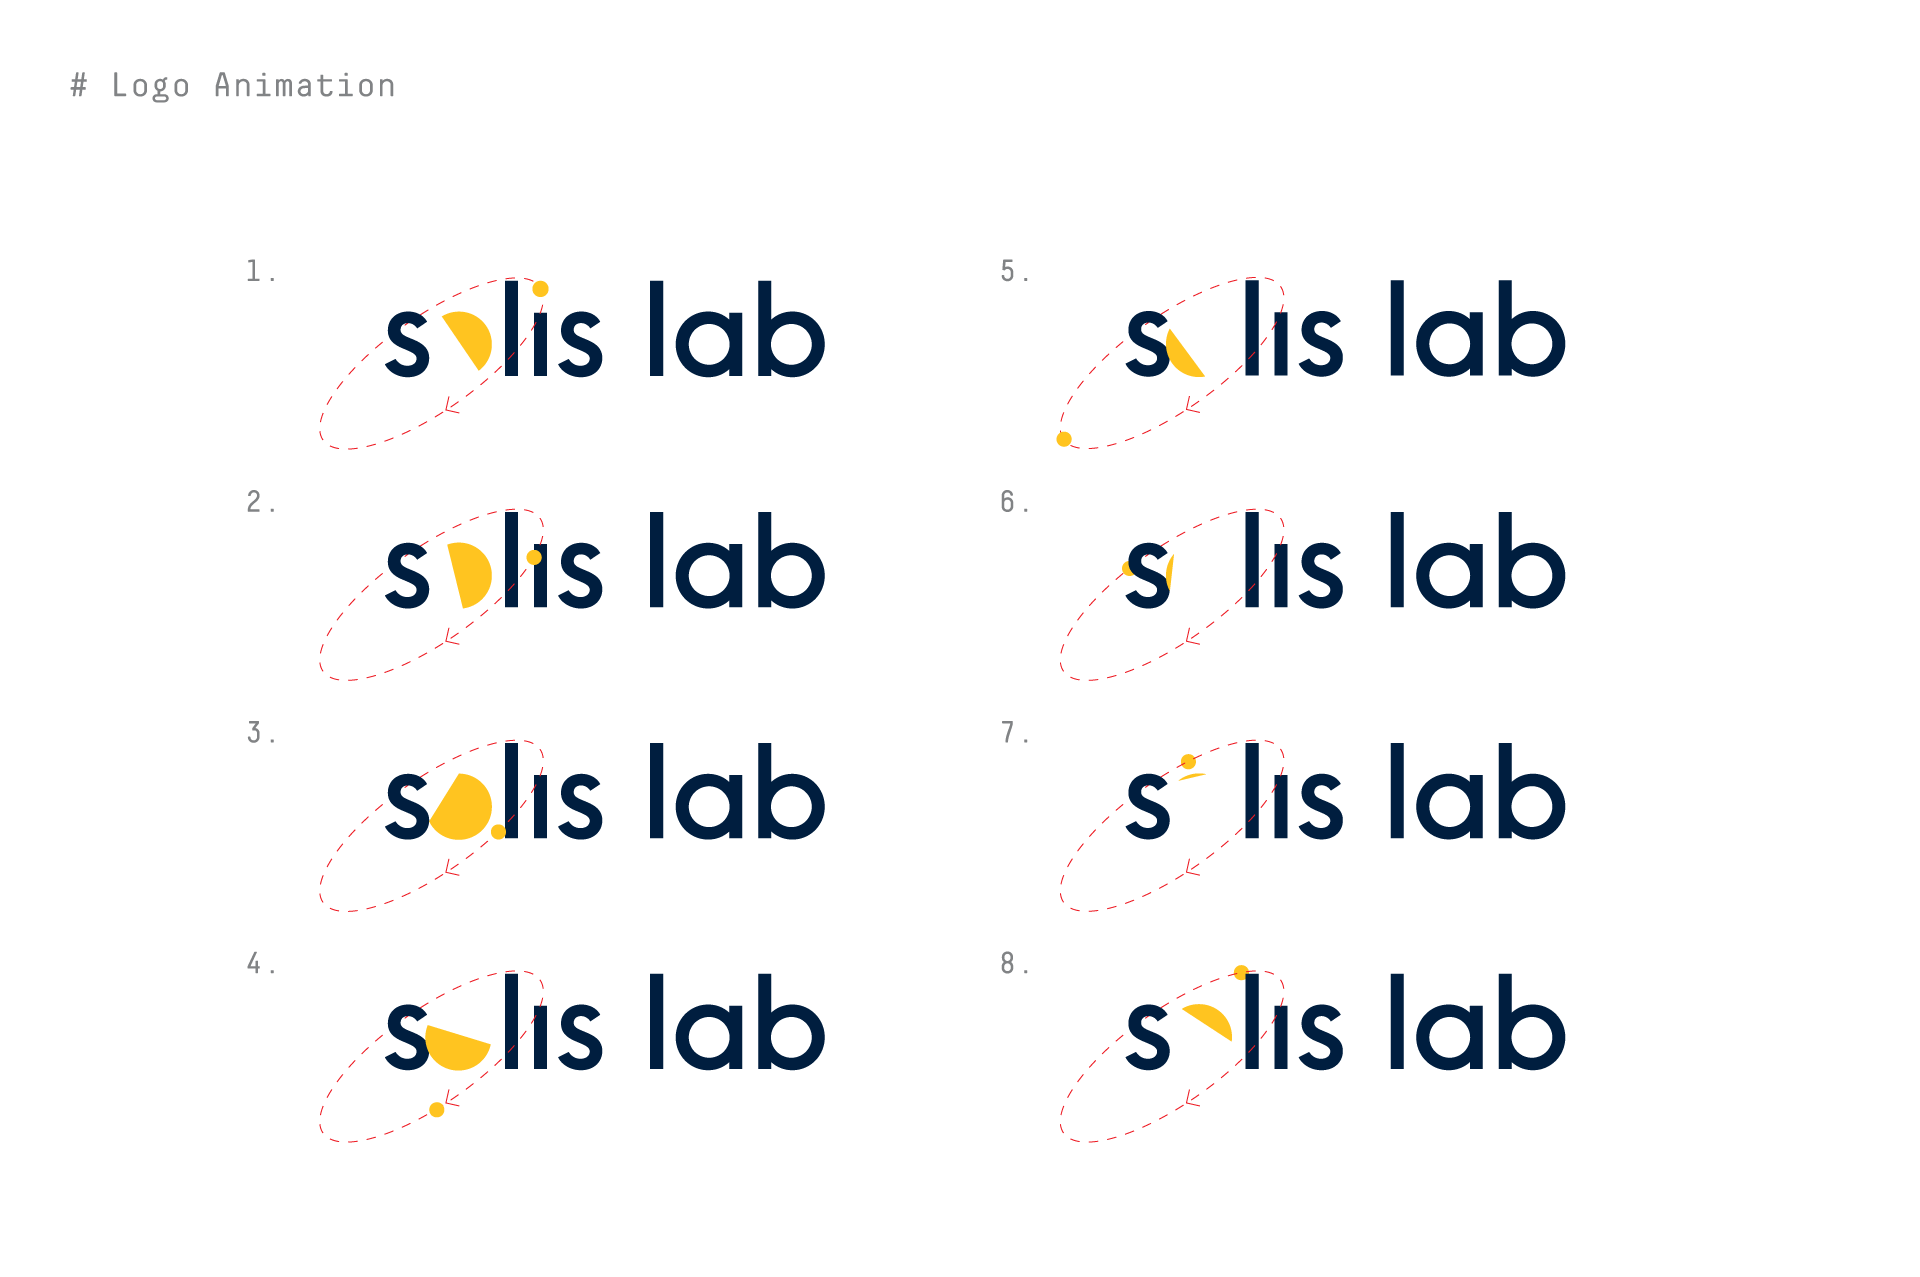 solis lab - logo animation